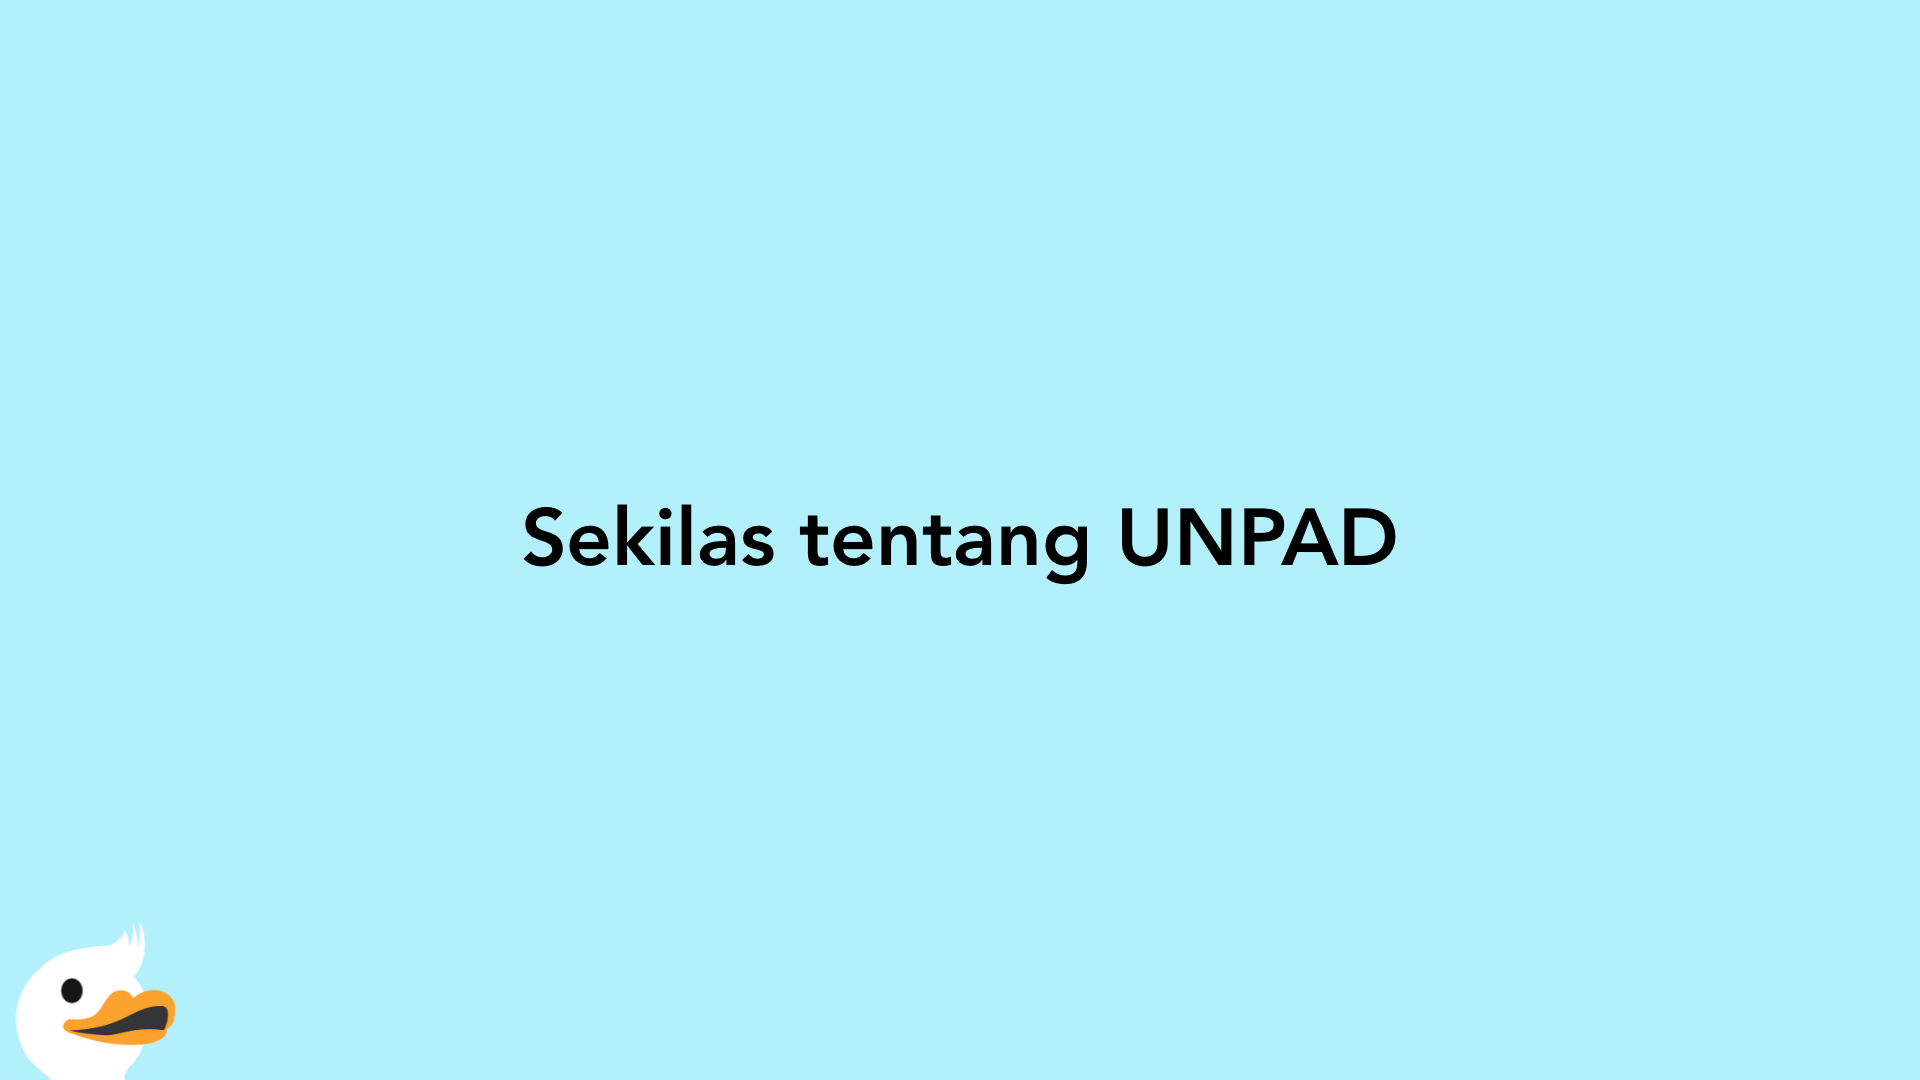 Sekilas tentang UNPAD